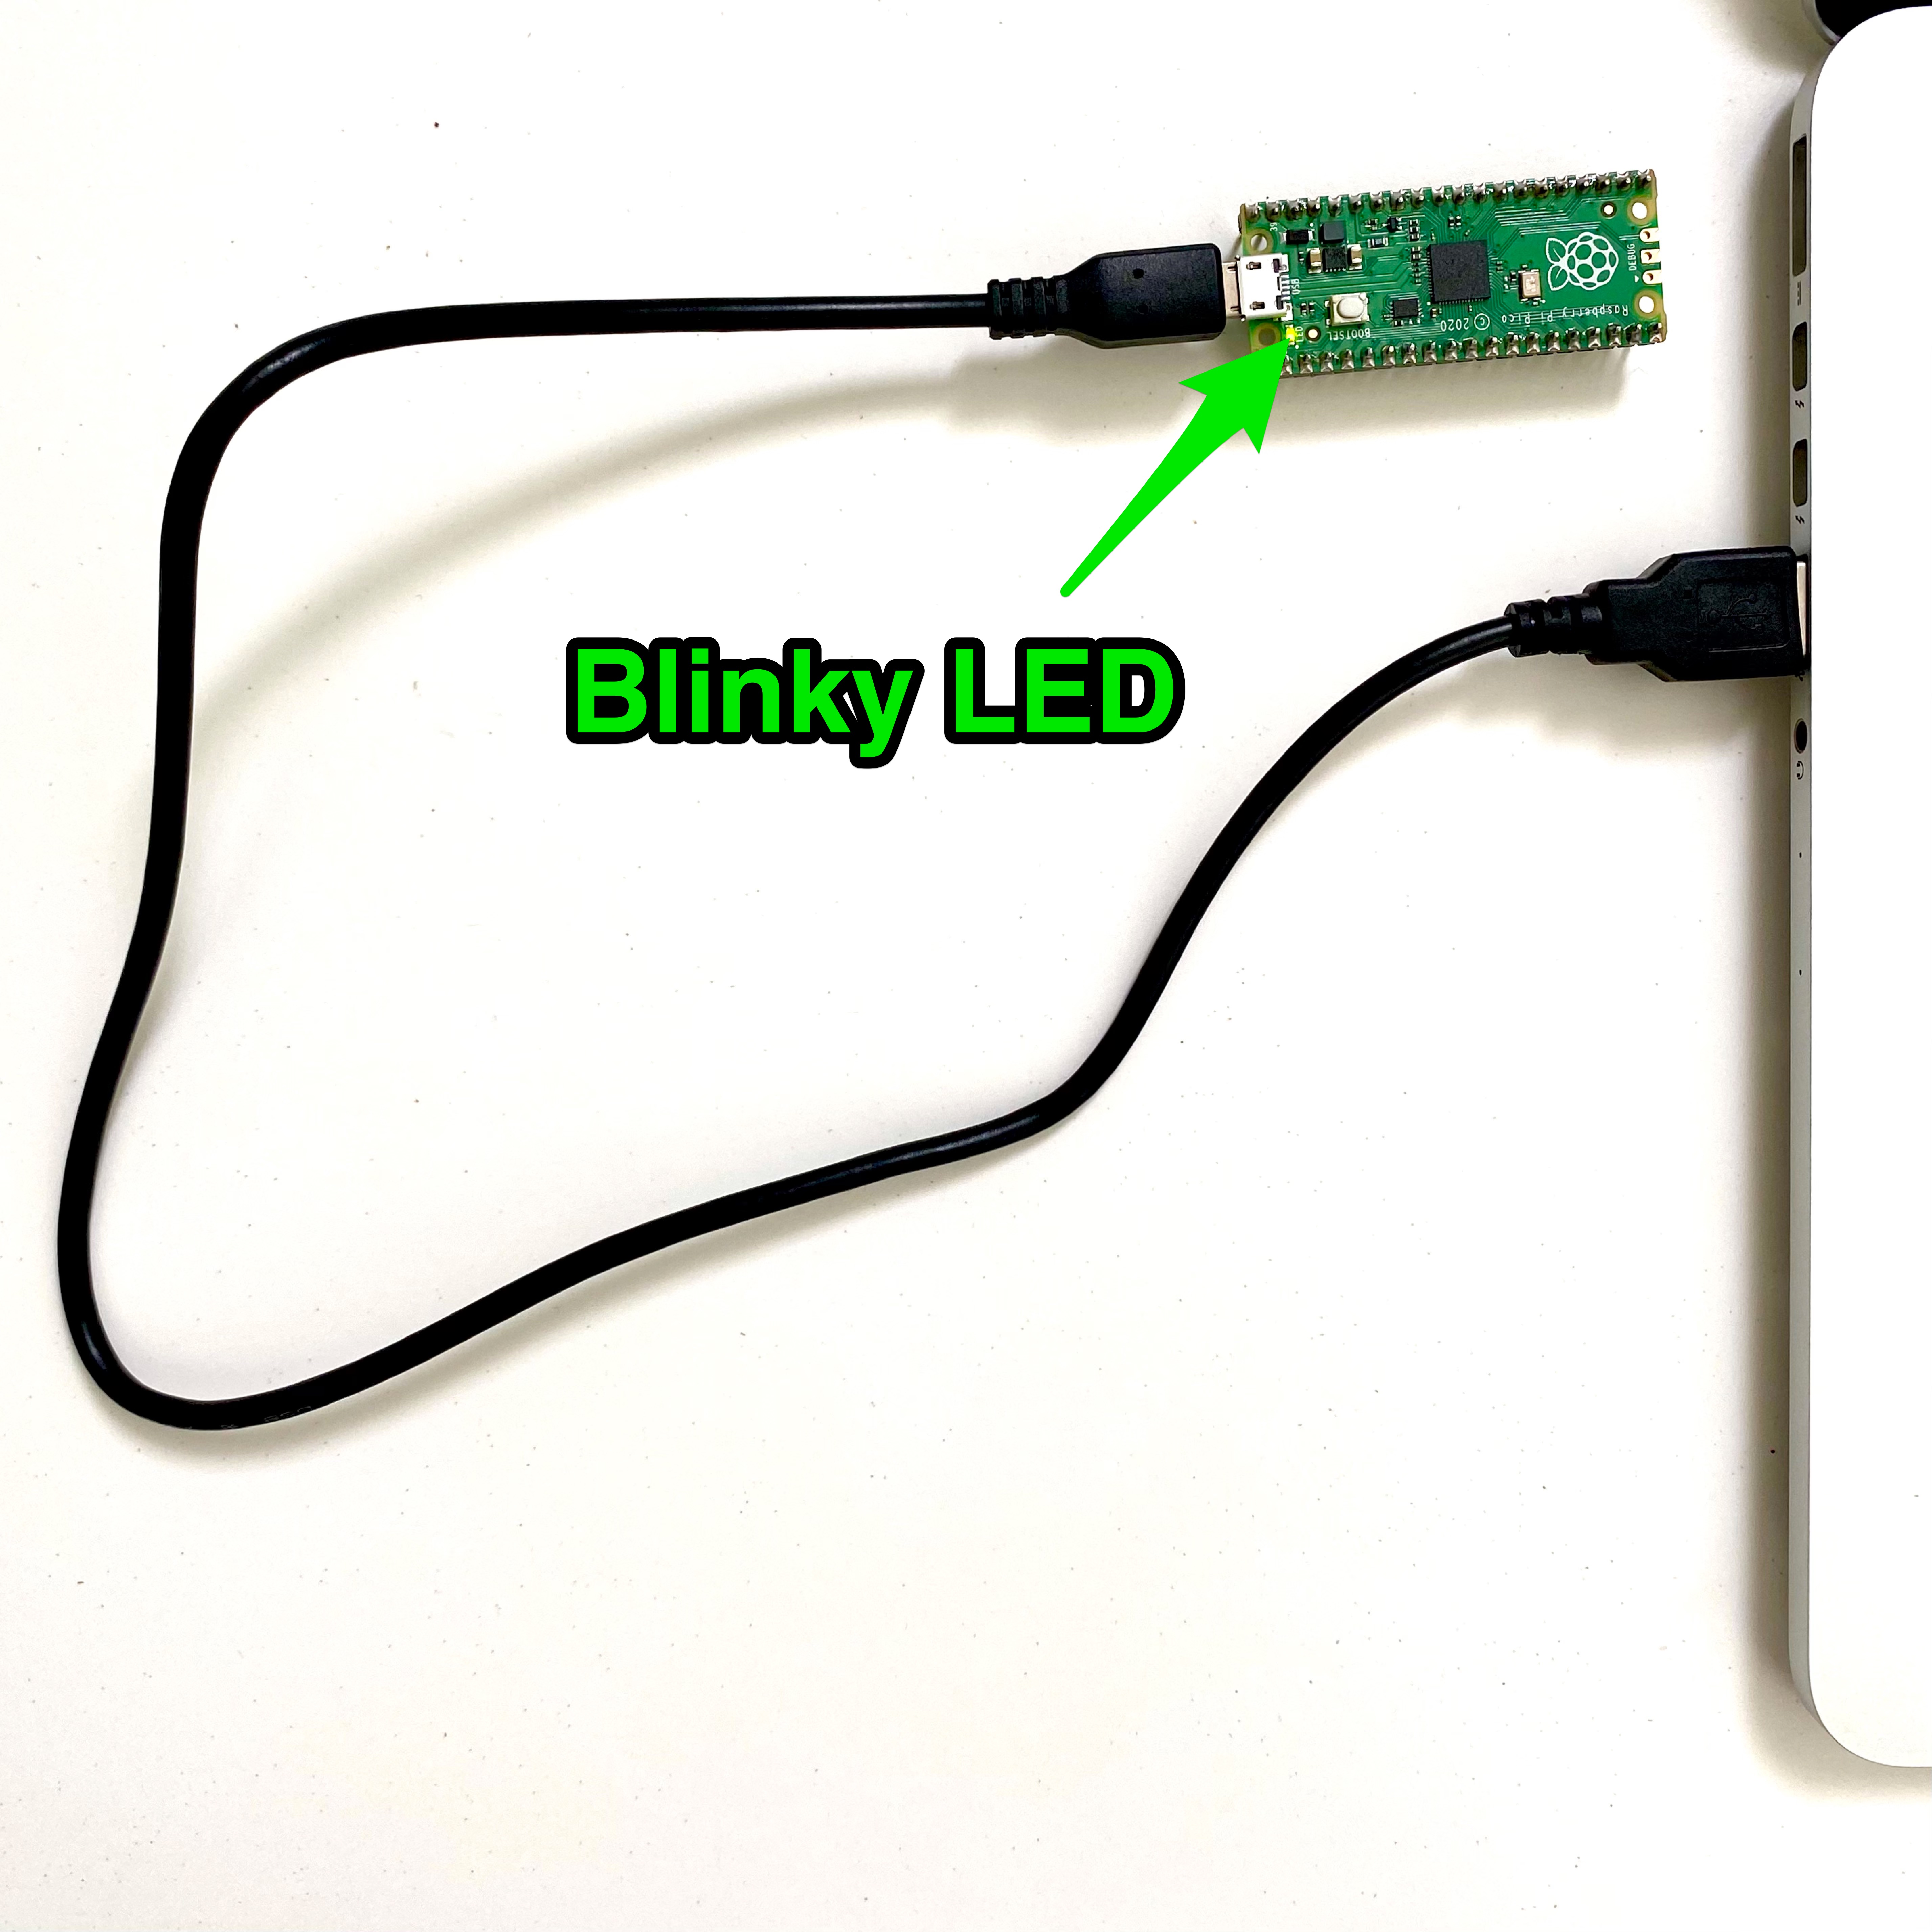 Blinky with RaspberryPI Pico prototype